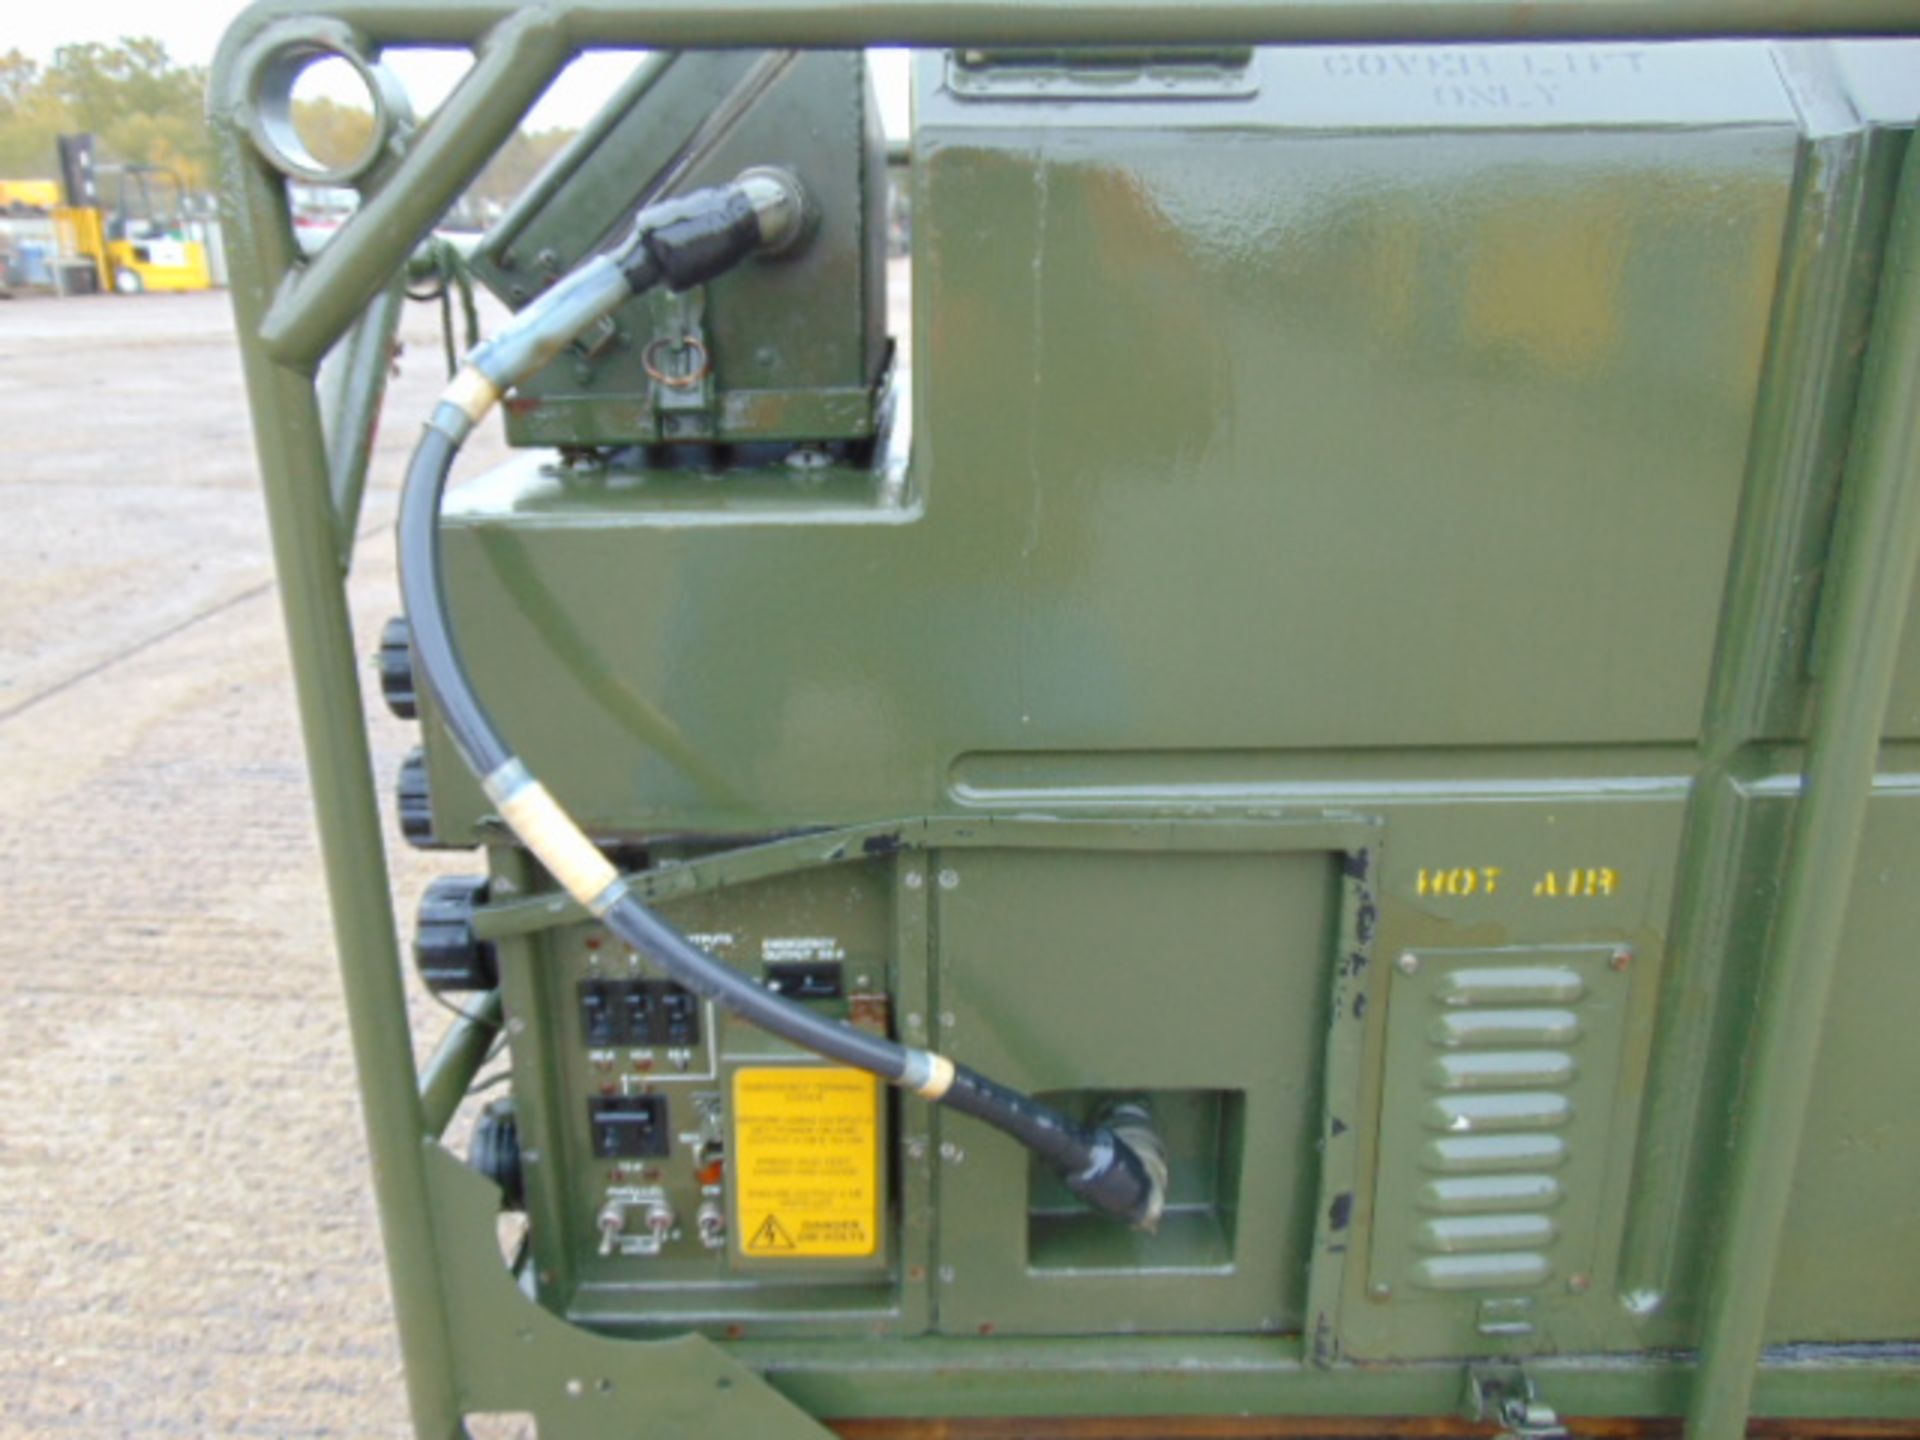 Lister Petter Air Log 4169 A 5.6 KVA Diesel Generator - Image 12 of 14